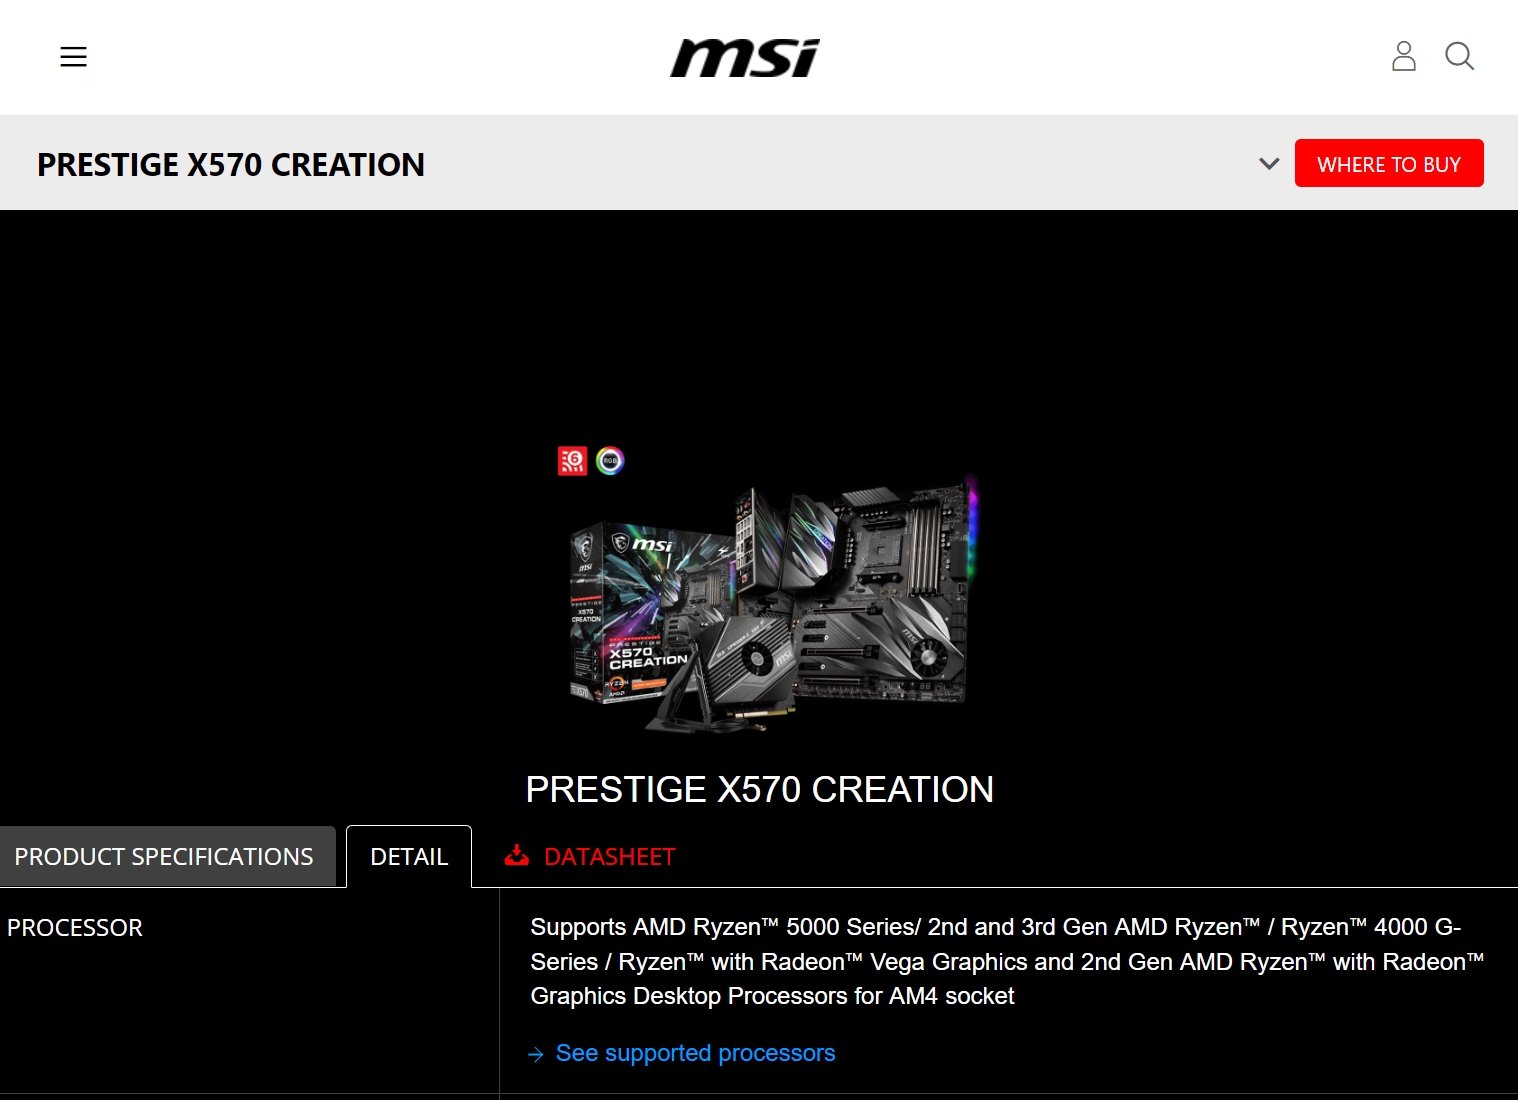 MSI Prestige Creation X570 - Specs